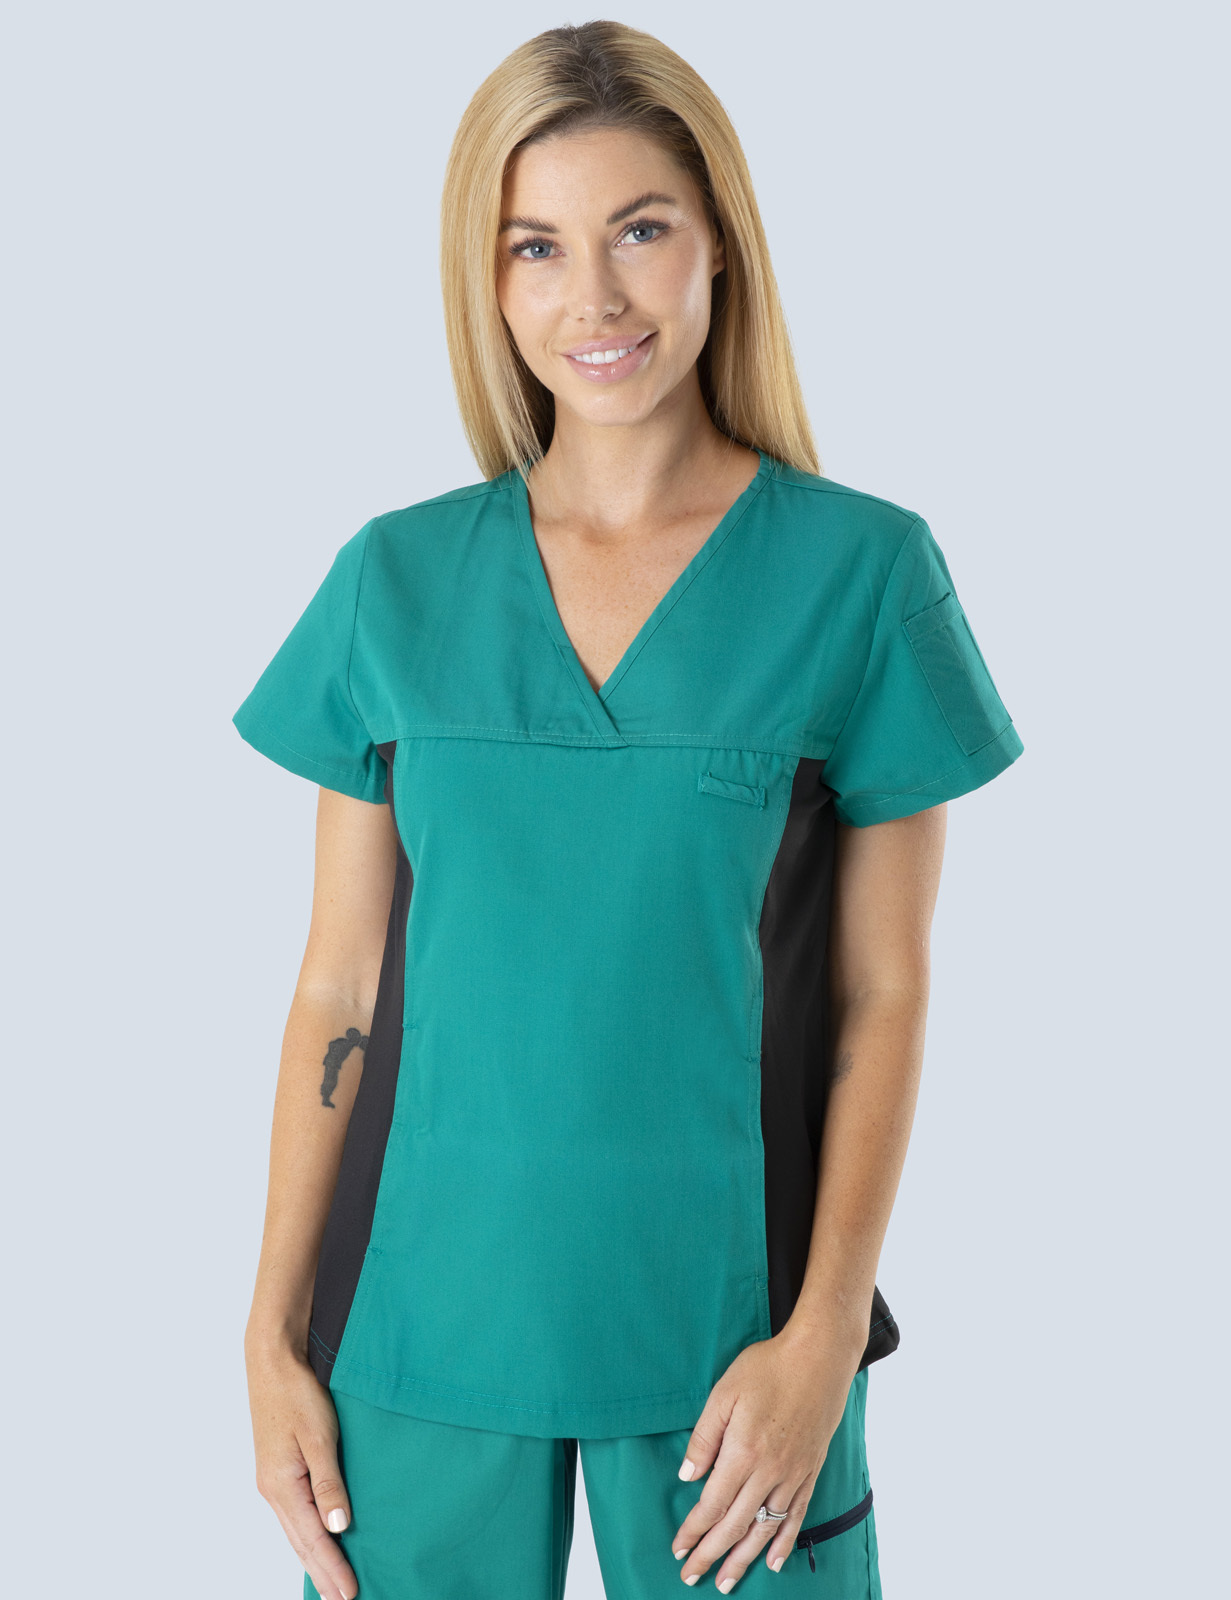 Ashmore Retreat Carer Uniform Top Only Bundle - (Women's Fit Spandex in Hunter incl Logo) 